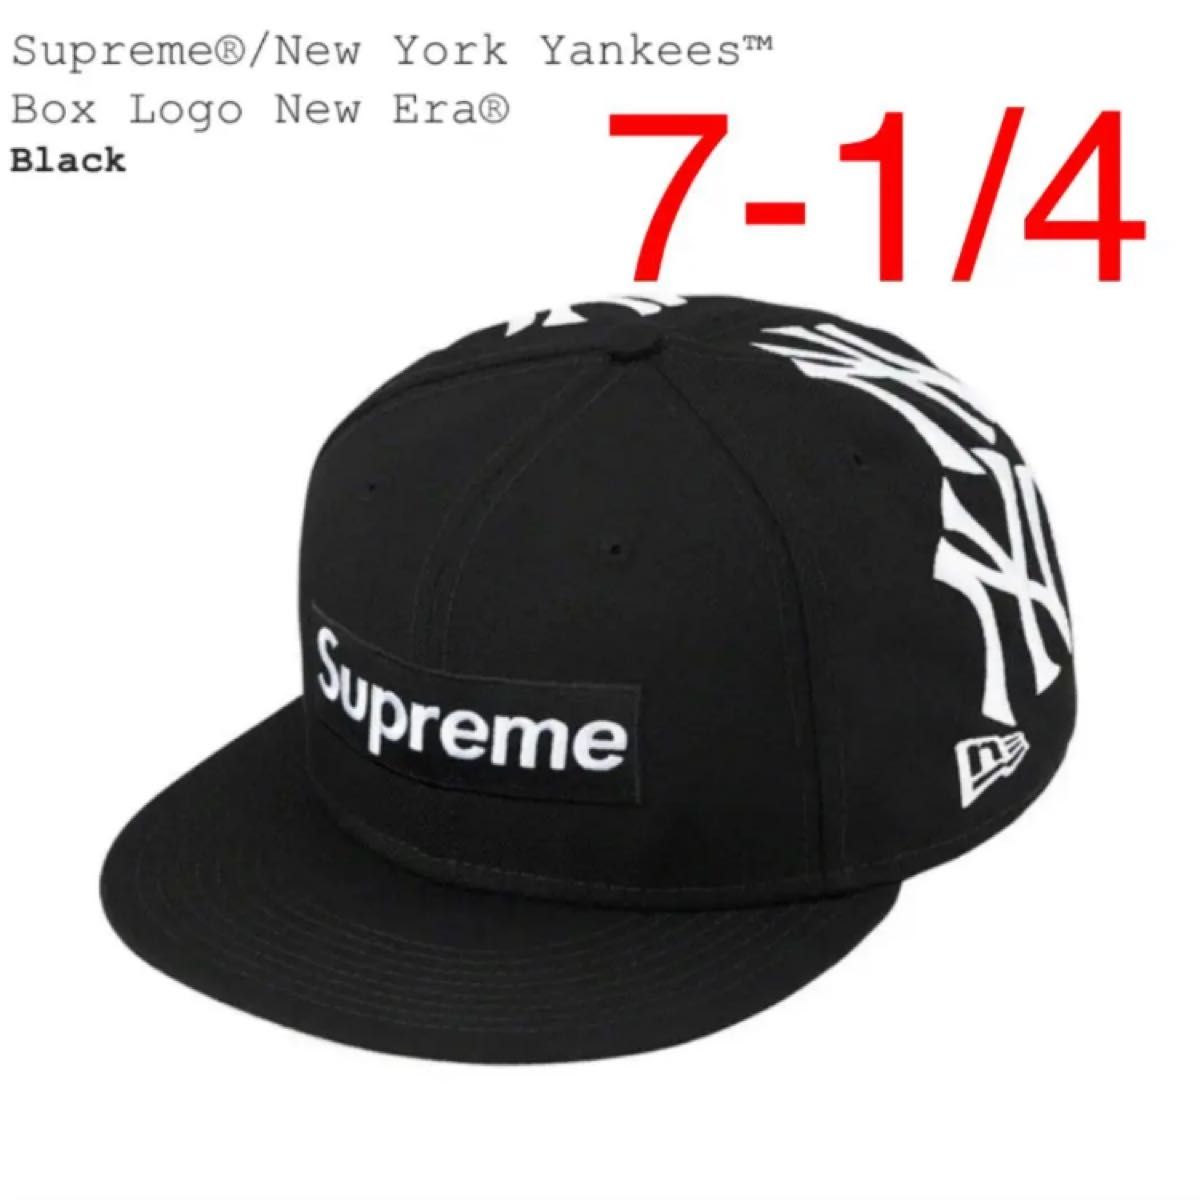 supreme new york yankees box logo new era